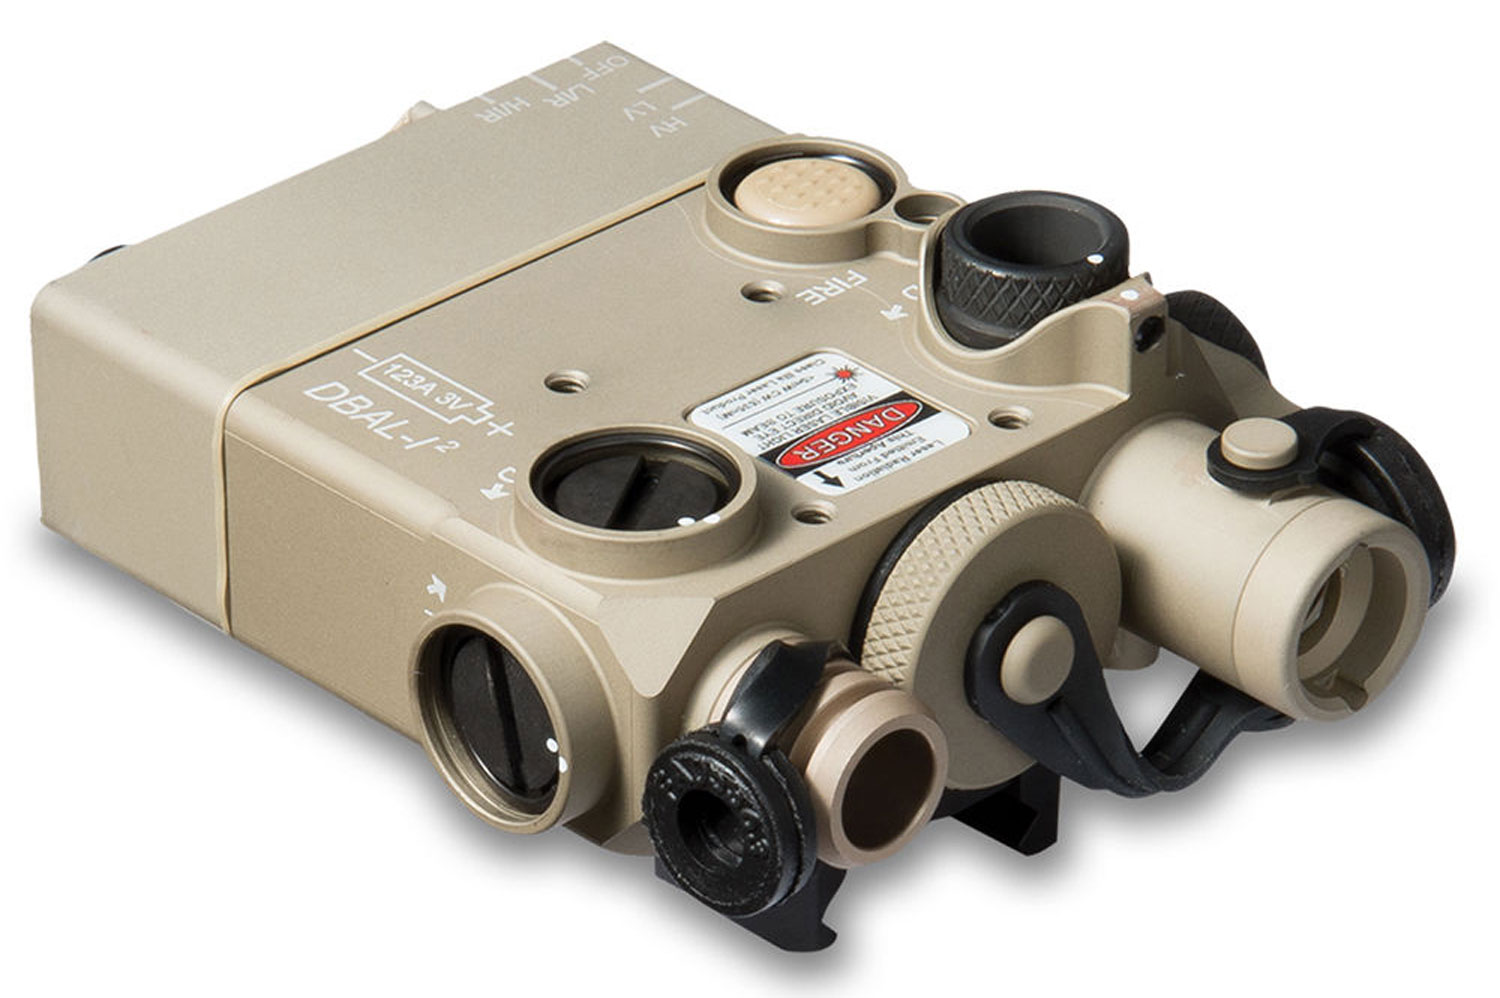 Steiner 9005 DBAL-I2  5mW Red Laser with 635nM Wavelenght & 0.7mW, 850nM Wavelength IR Pointer with Desert Sand Finish & QD HT Mount